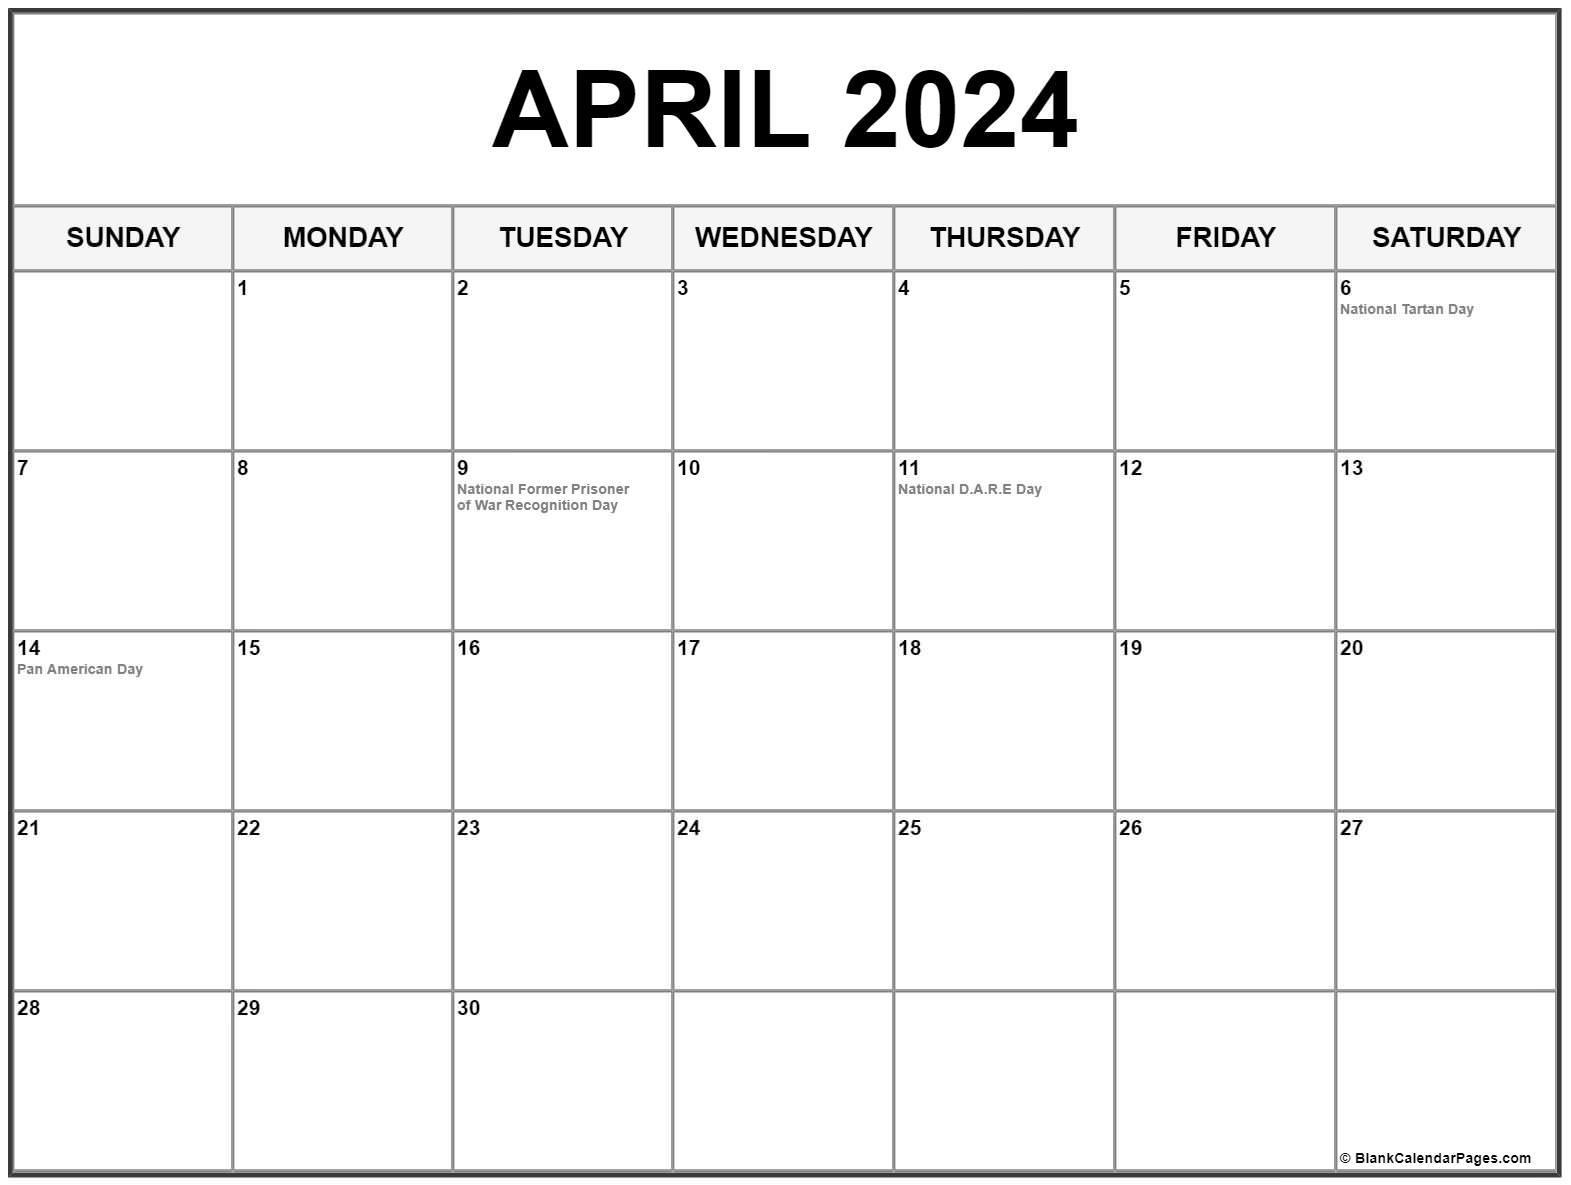 April 2024 With Holidays Calendar inside April 2024 Calendar With Holidays